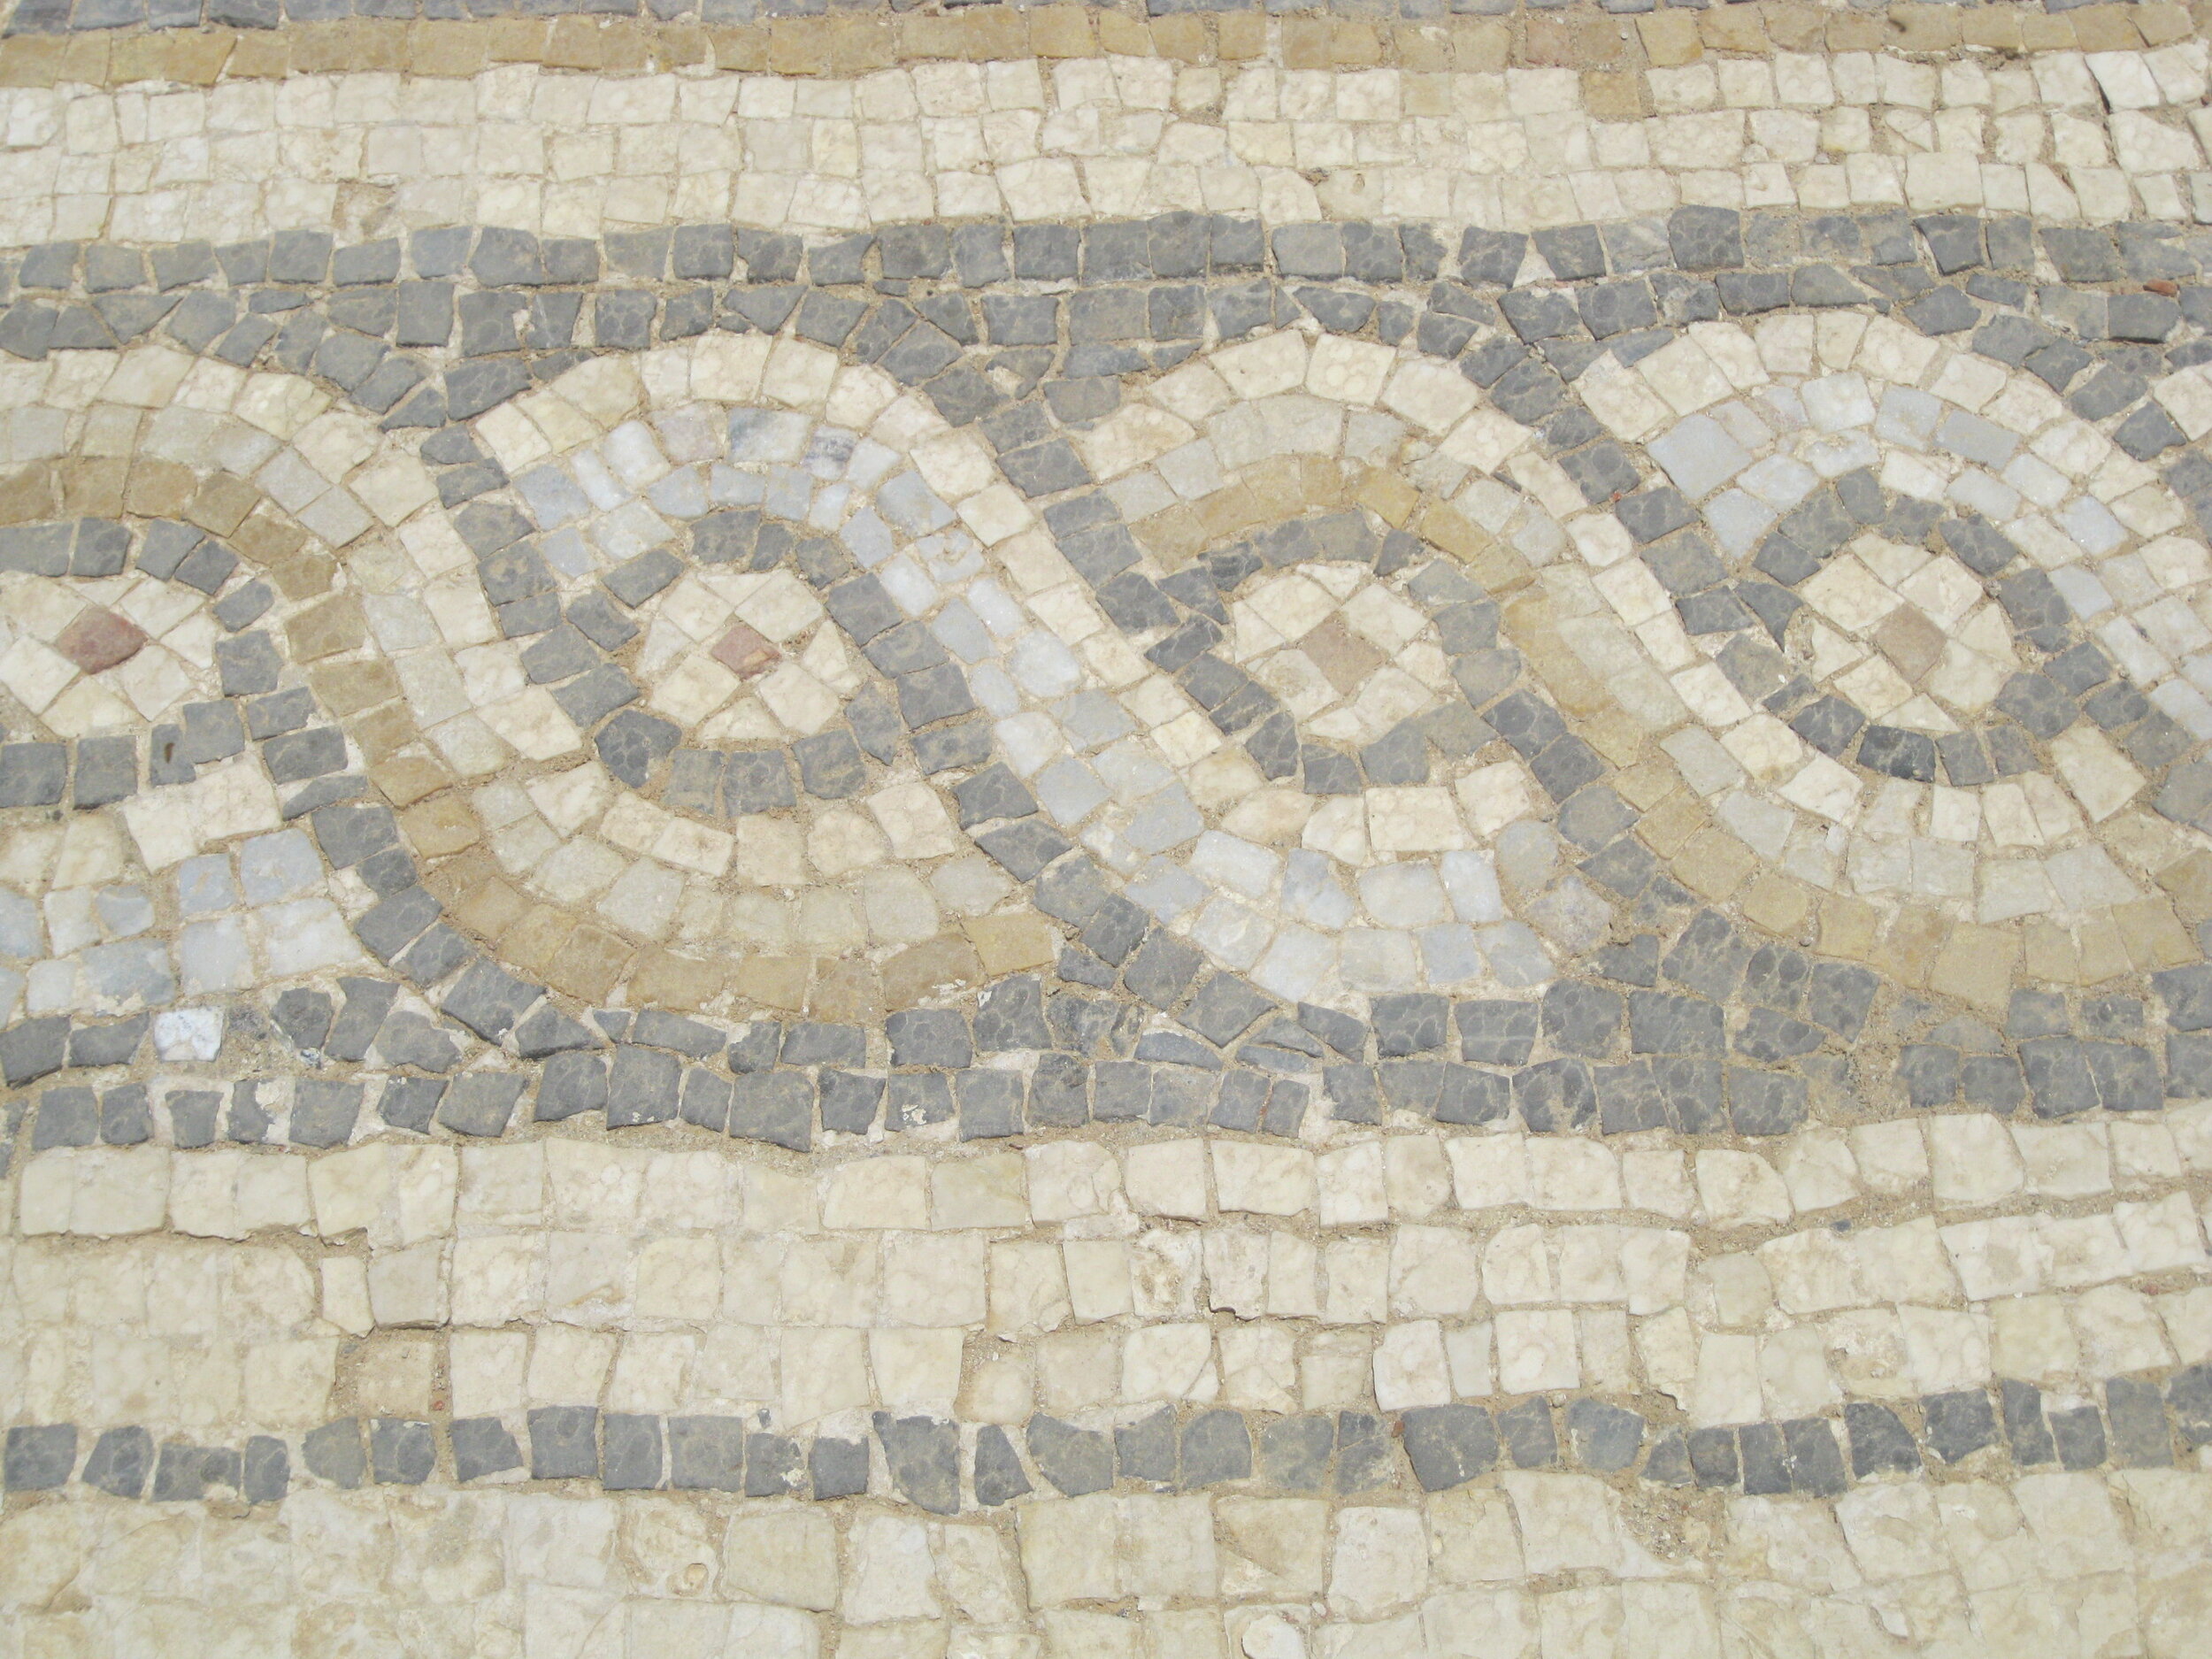  Mosaics at Caesarea 